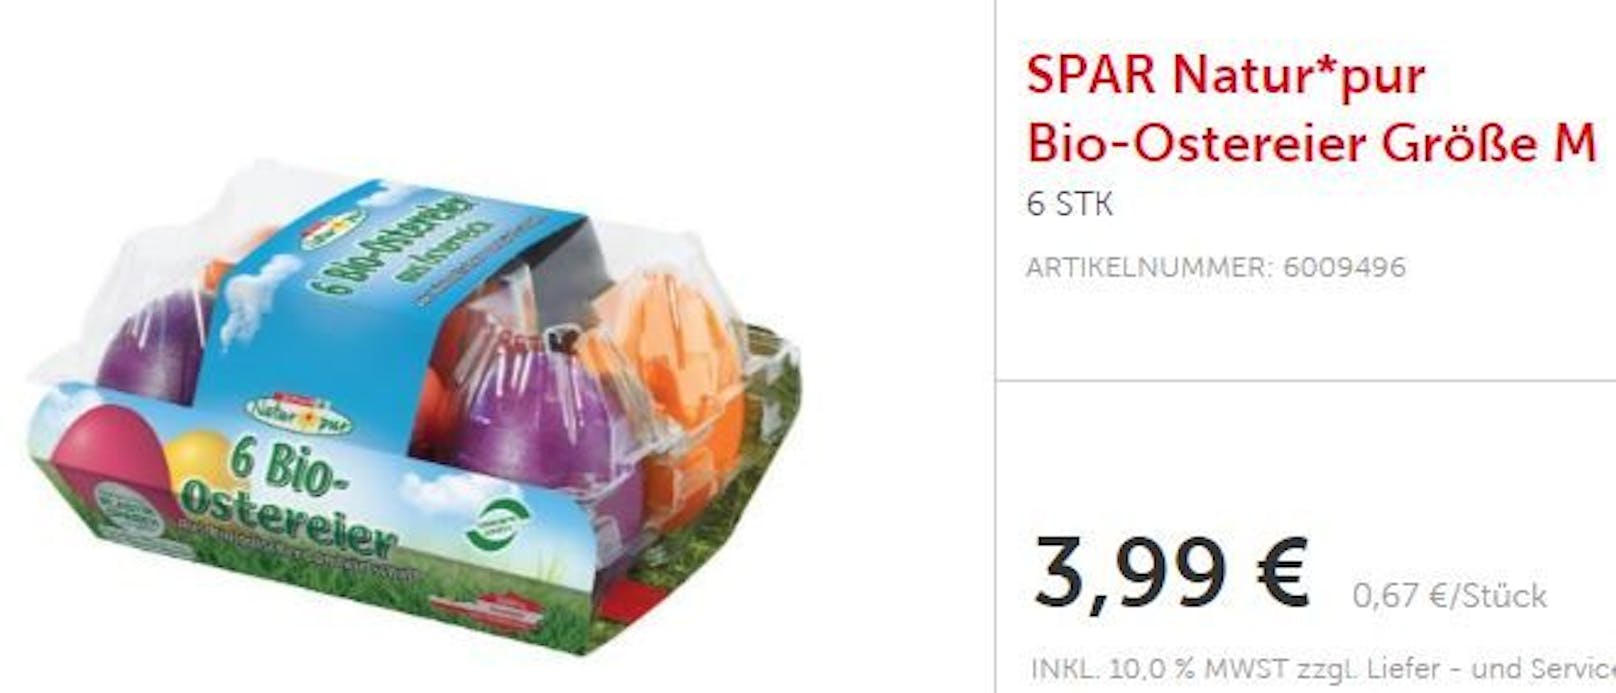 Für Bio-Ostereier zahlt man knapp 4 Euro.